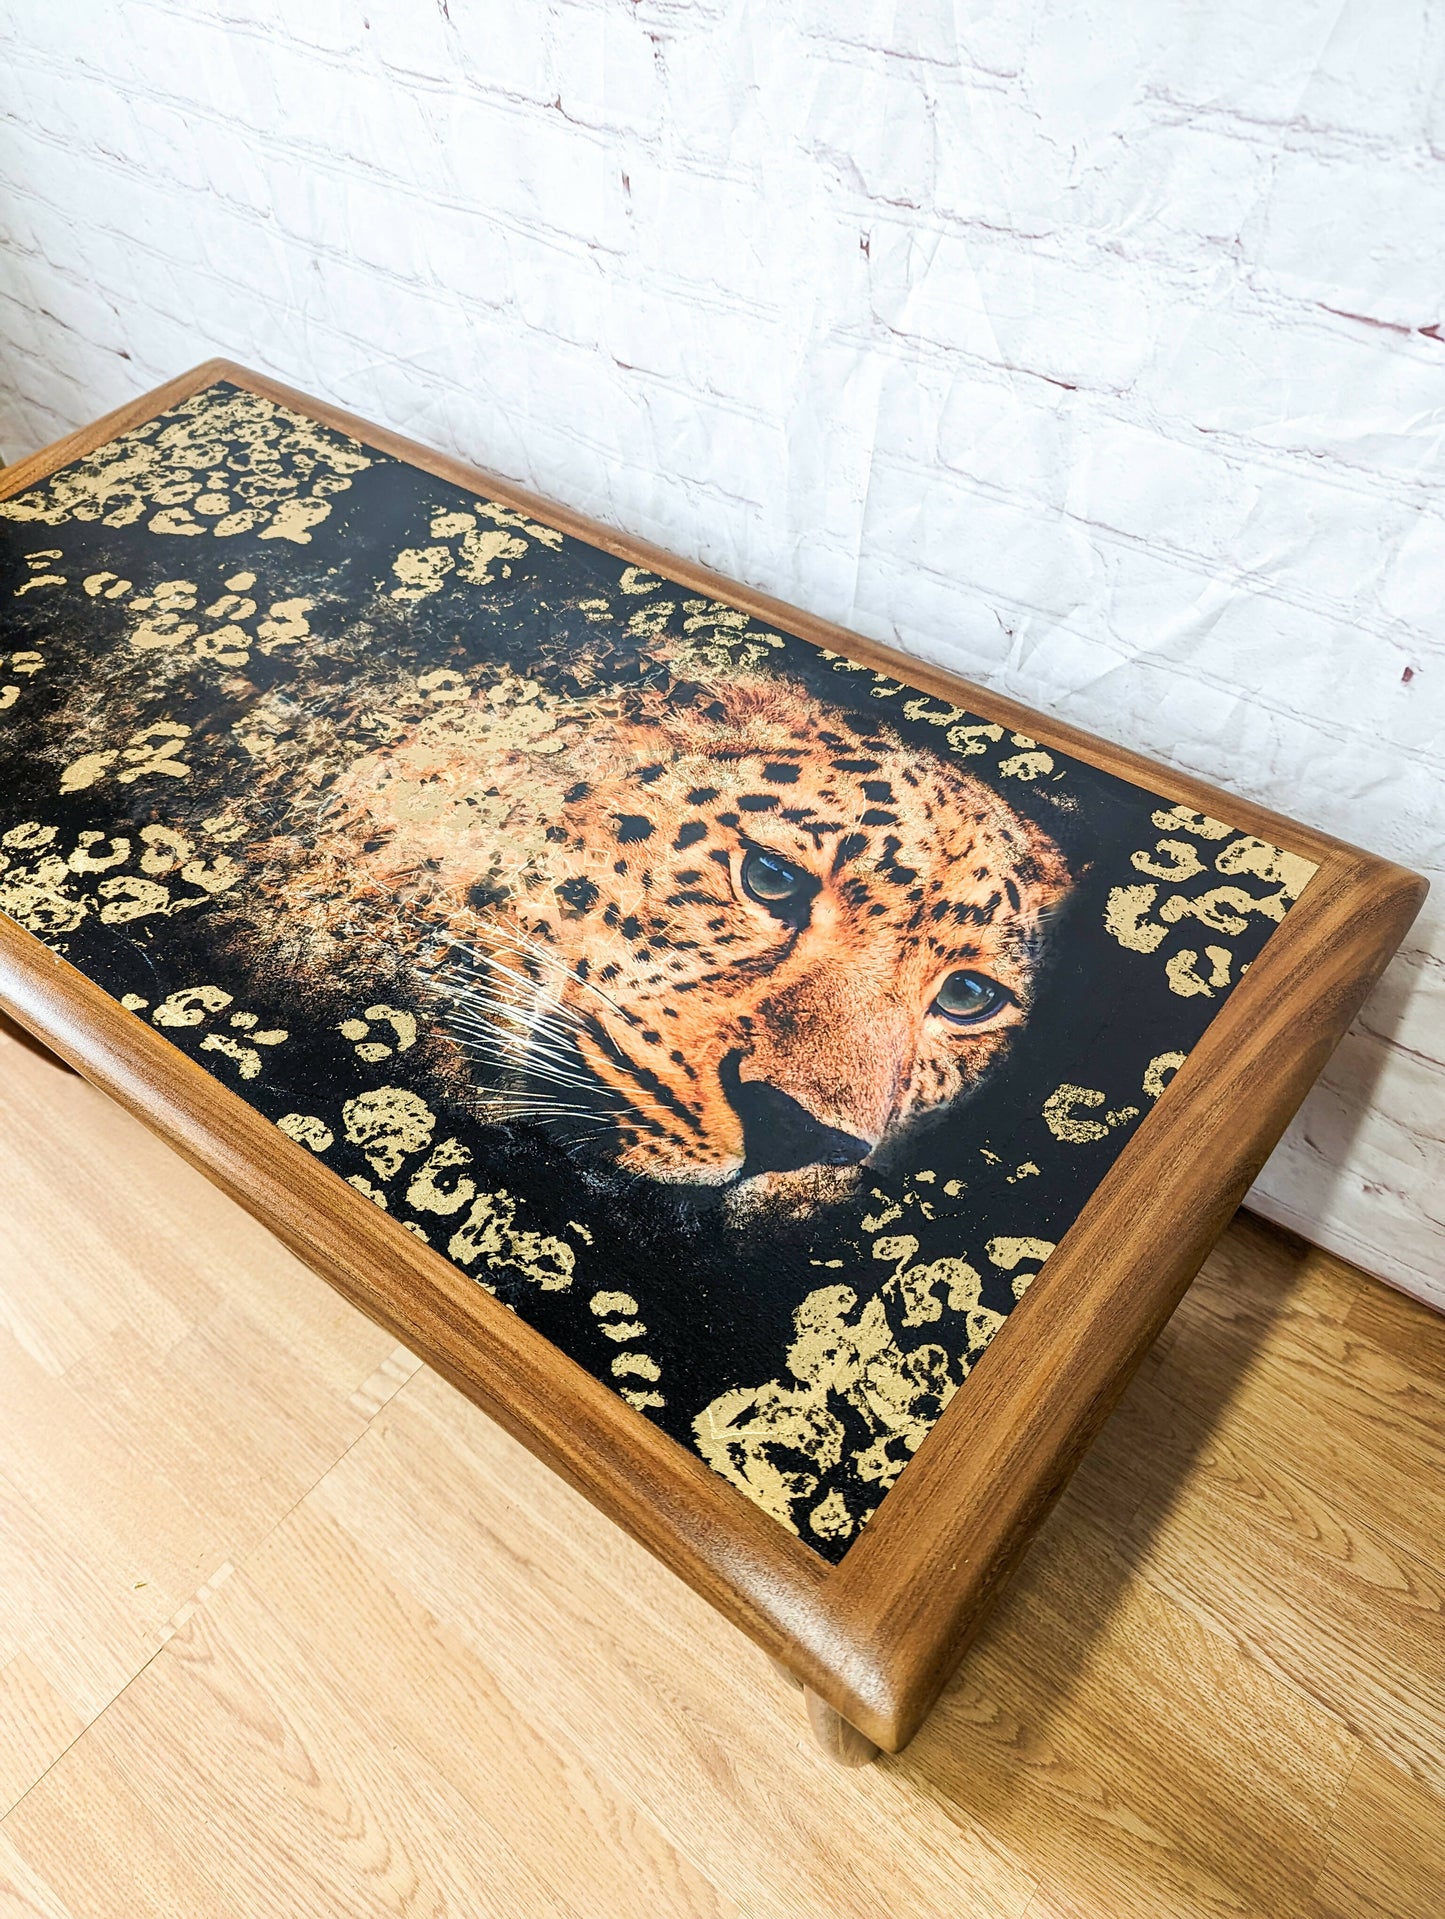 G Plan Astro Long John Teak Nest Of Tables, Leopard Decoupage, Wild Cat, Gold Leaf - MADE TO ORDER